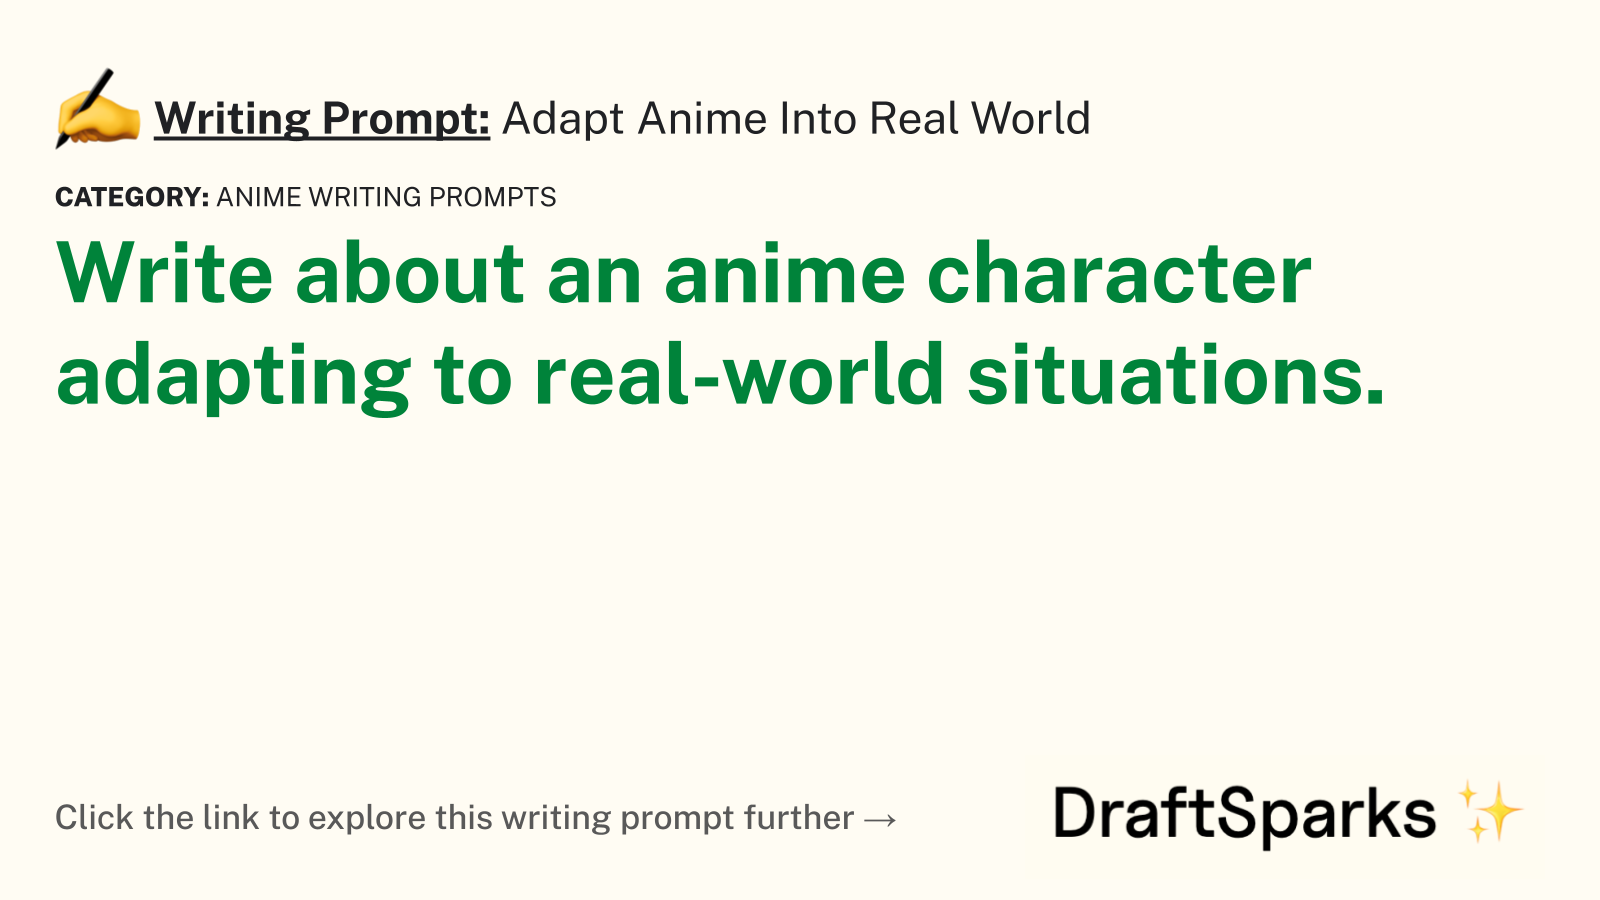 Adapt Anime Into Real World